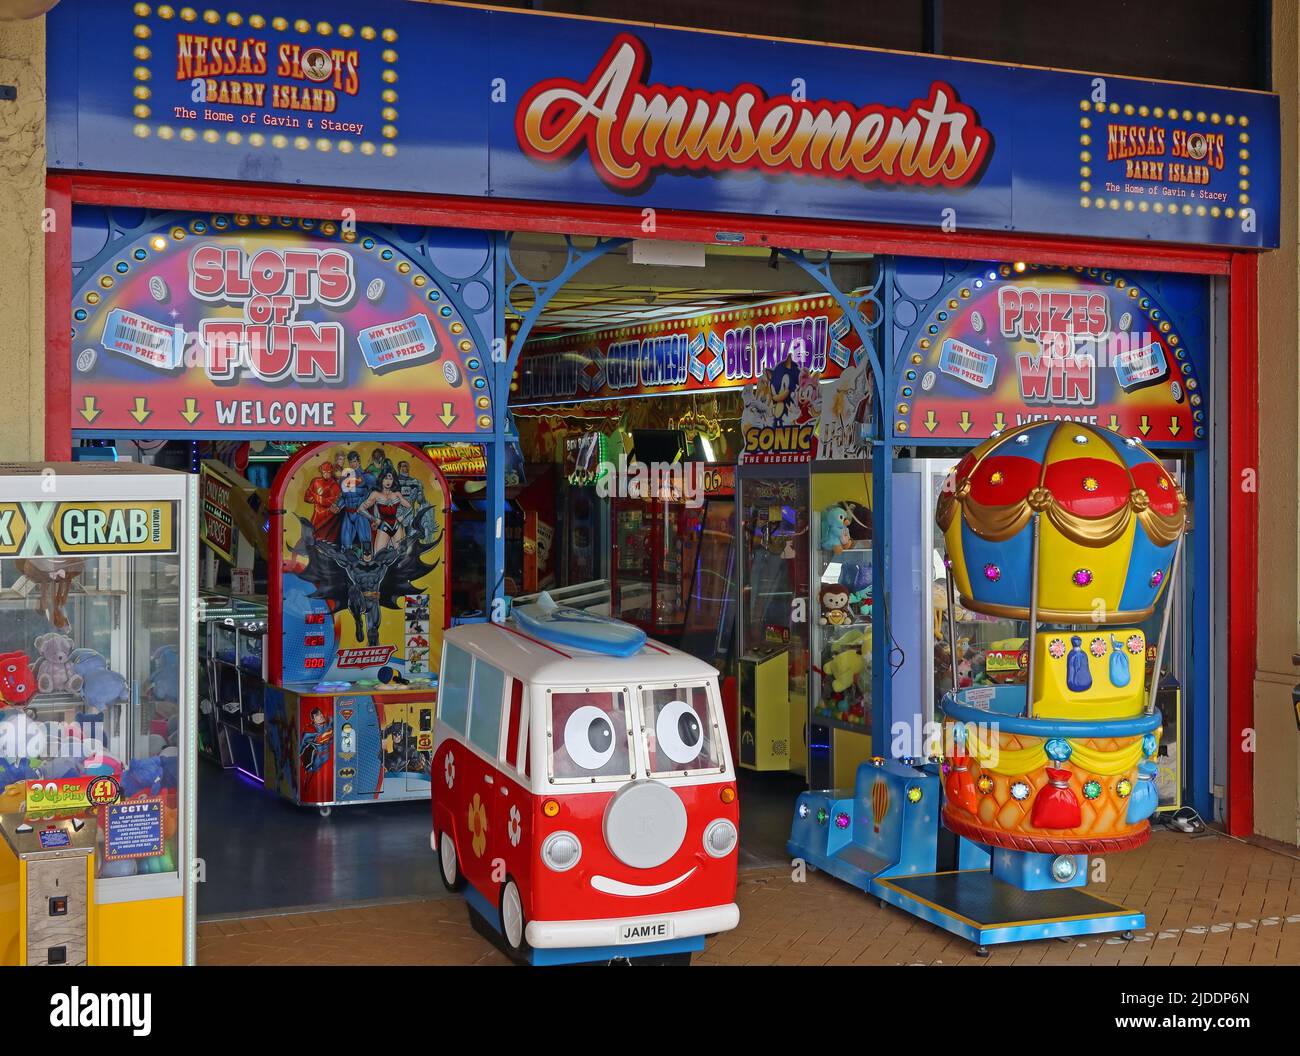 Nessas Slots, Amusements, 11 Paget Road, Barry Island, Vale of Glamorgan, South Wales seaside, UK, CF62 5TQ Stock Photo